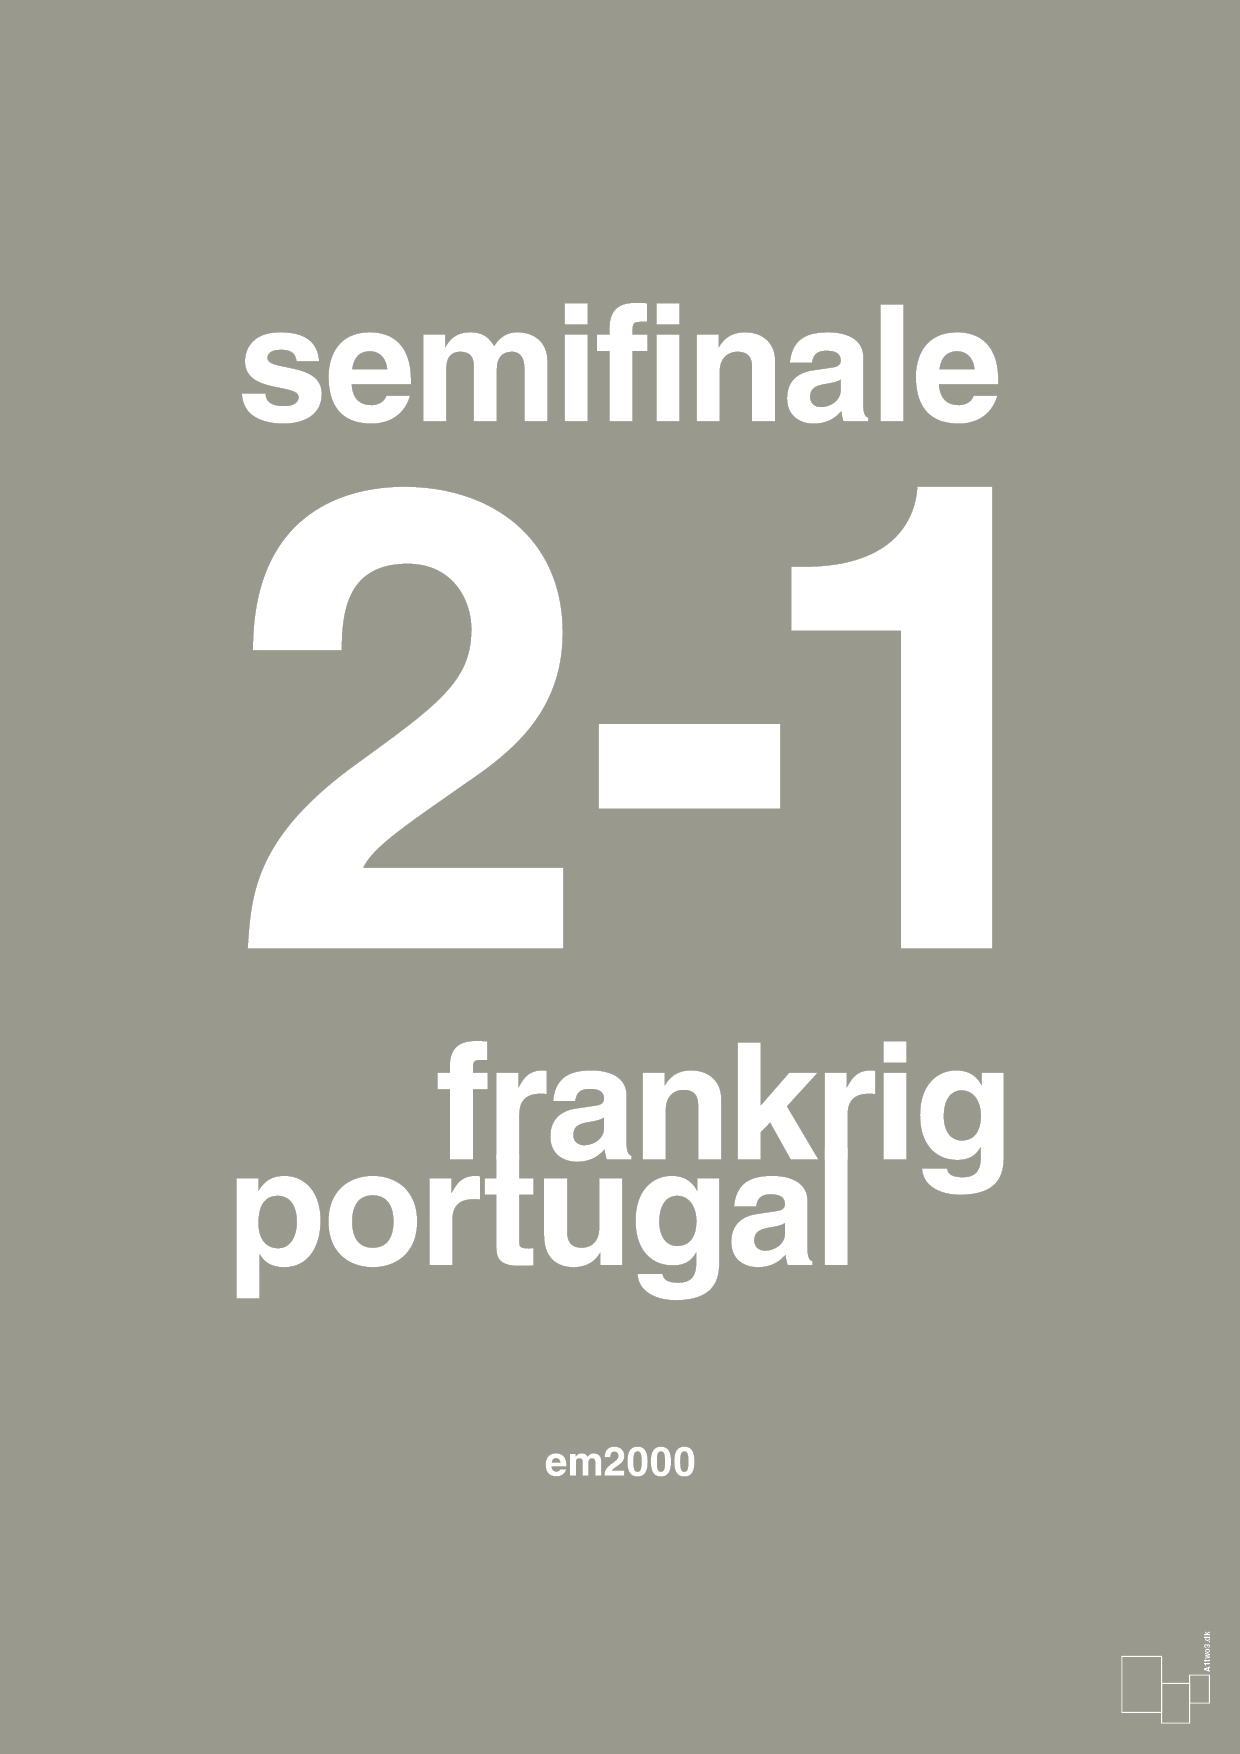 resultat for fodbold em semifinale B i 2000 - Plakat med Sport & Fritid i Battleship Gray